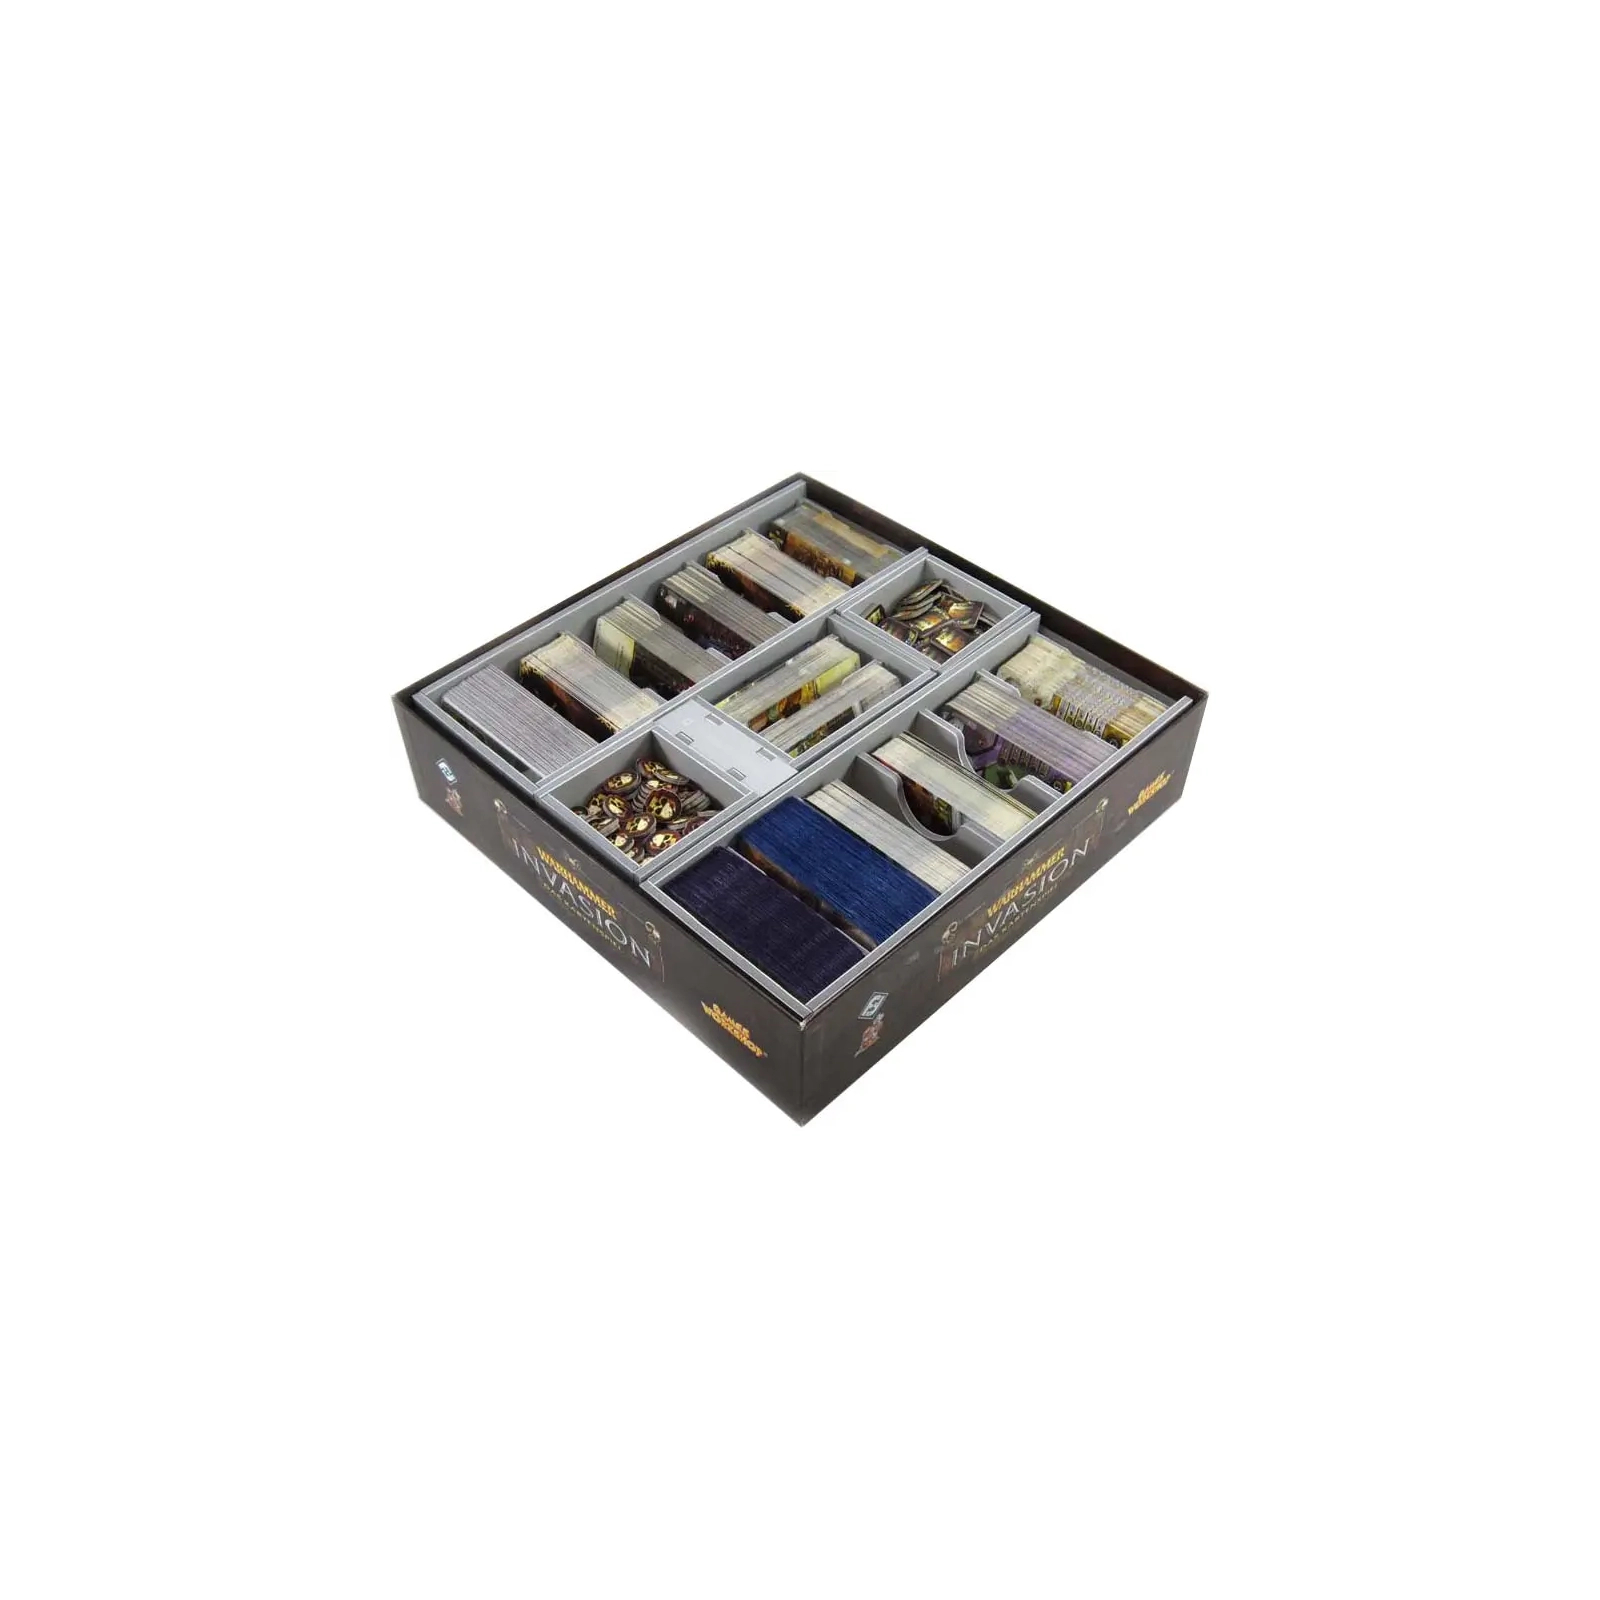 Органайзер для настольных игр Lord of Boards Living Card Games, box size of 29.8 x 29.8 x 7 cm (FS-LCG)